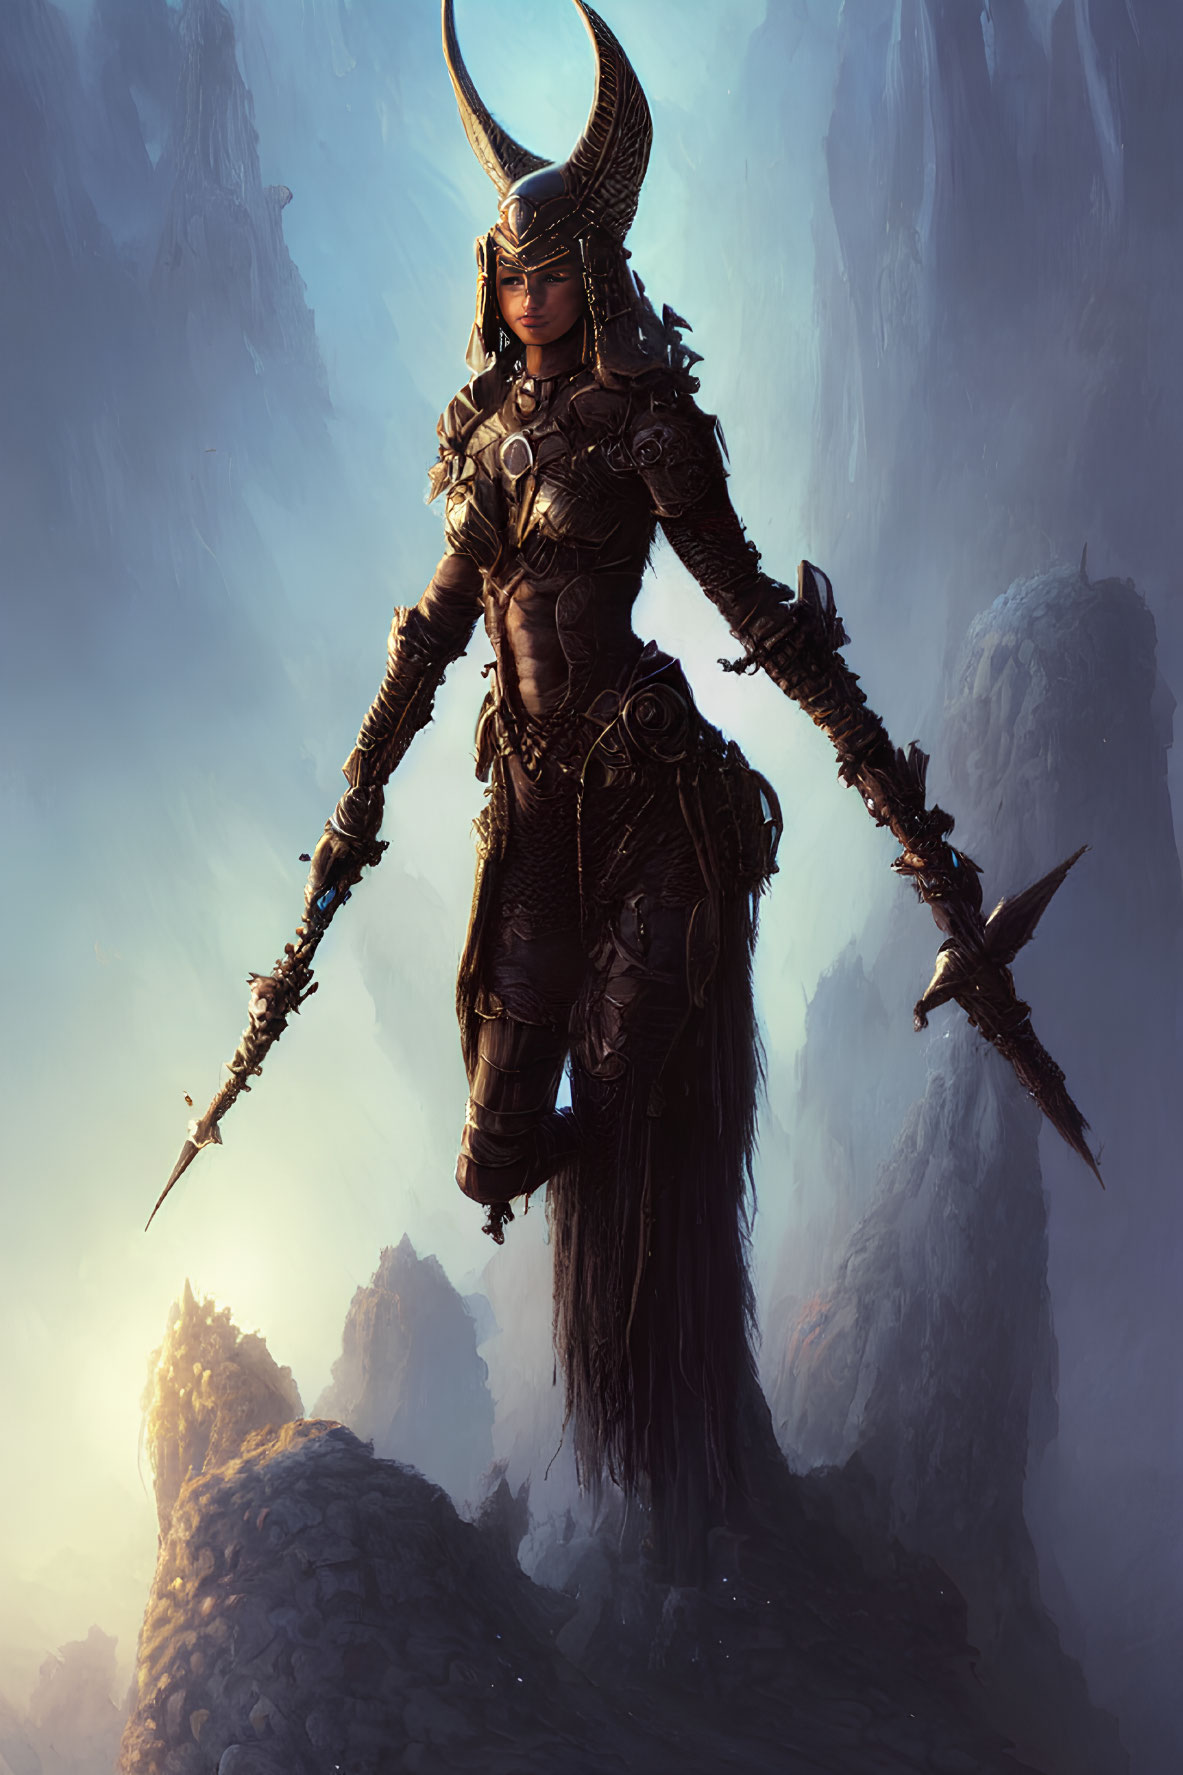 Ornate dark armor warrior with horned helmet and spear in misty mountainous setting